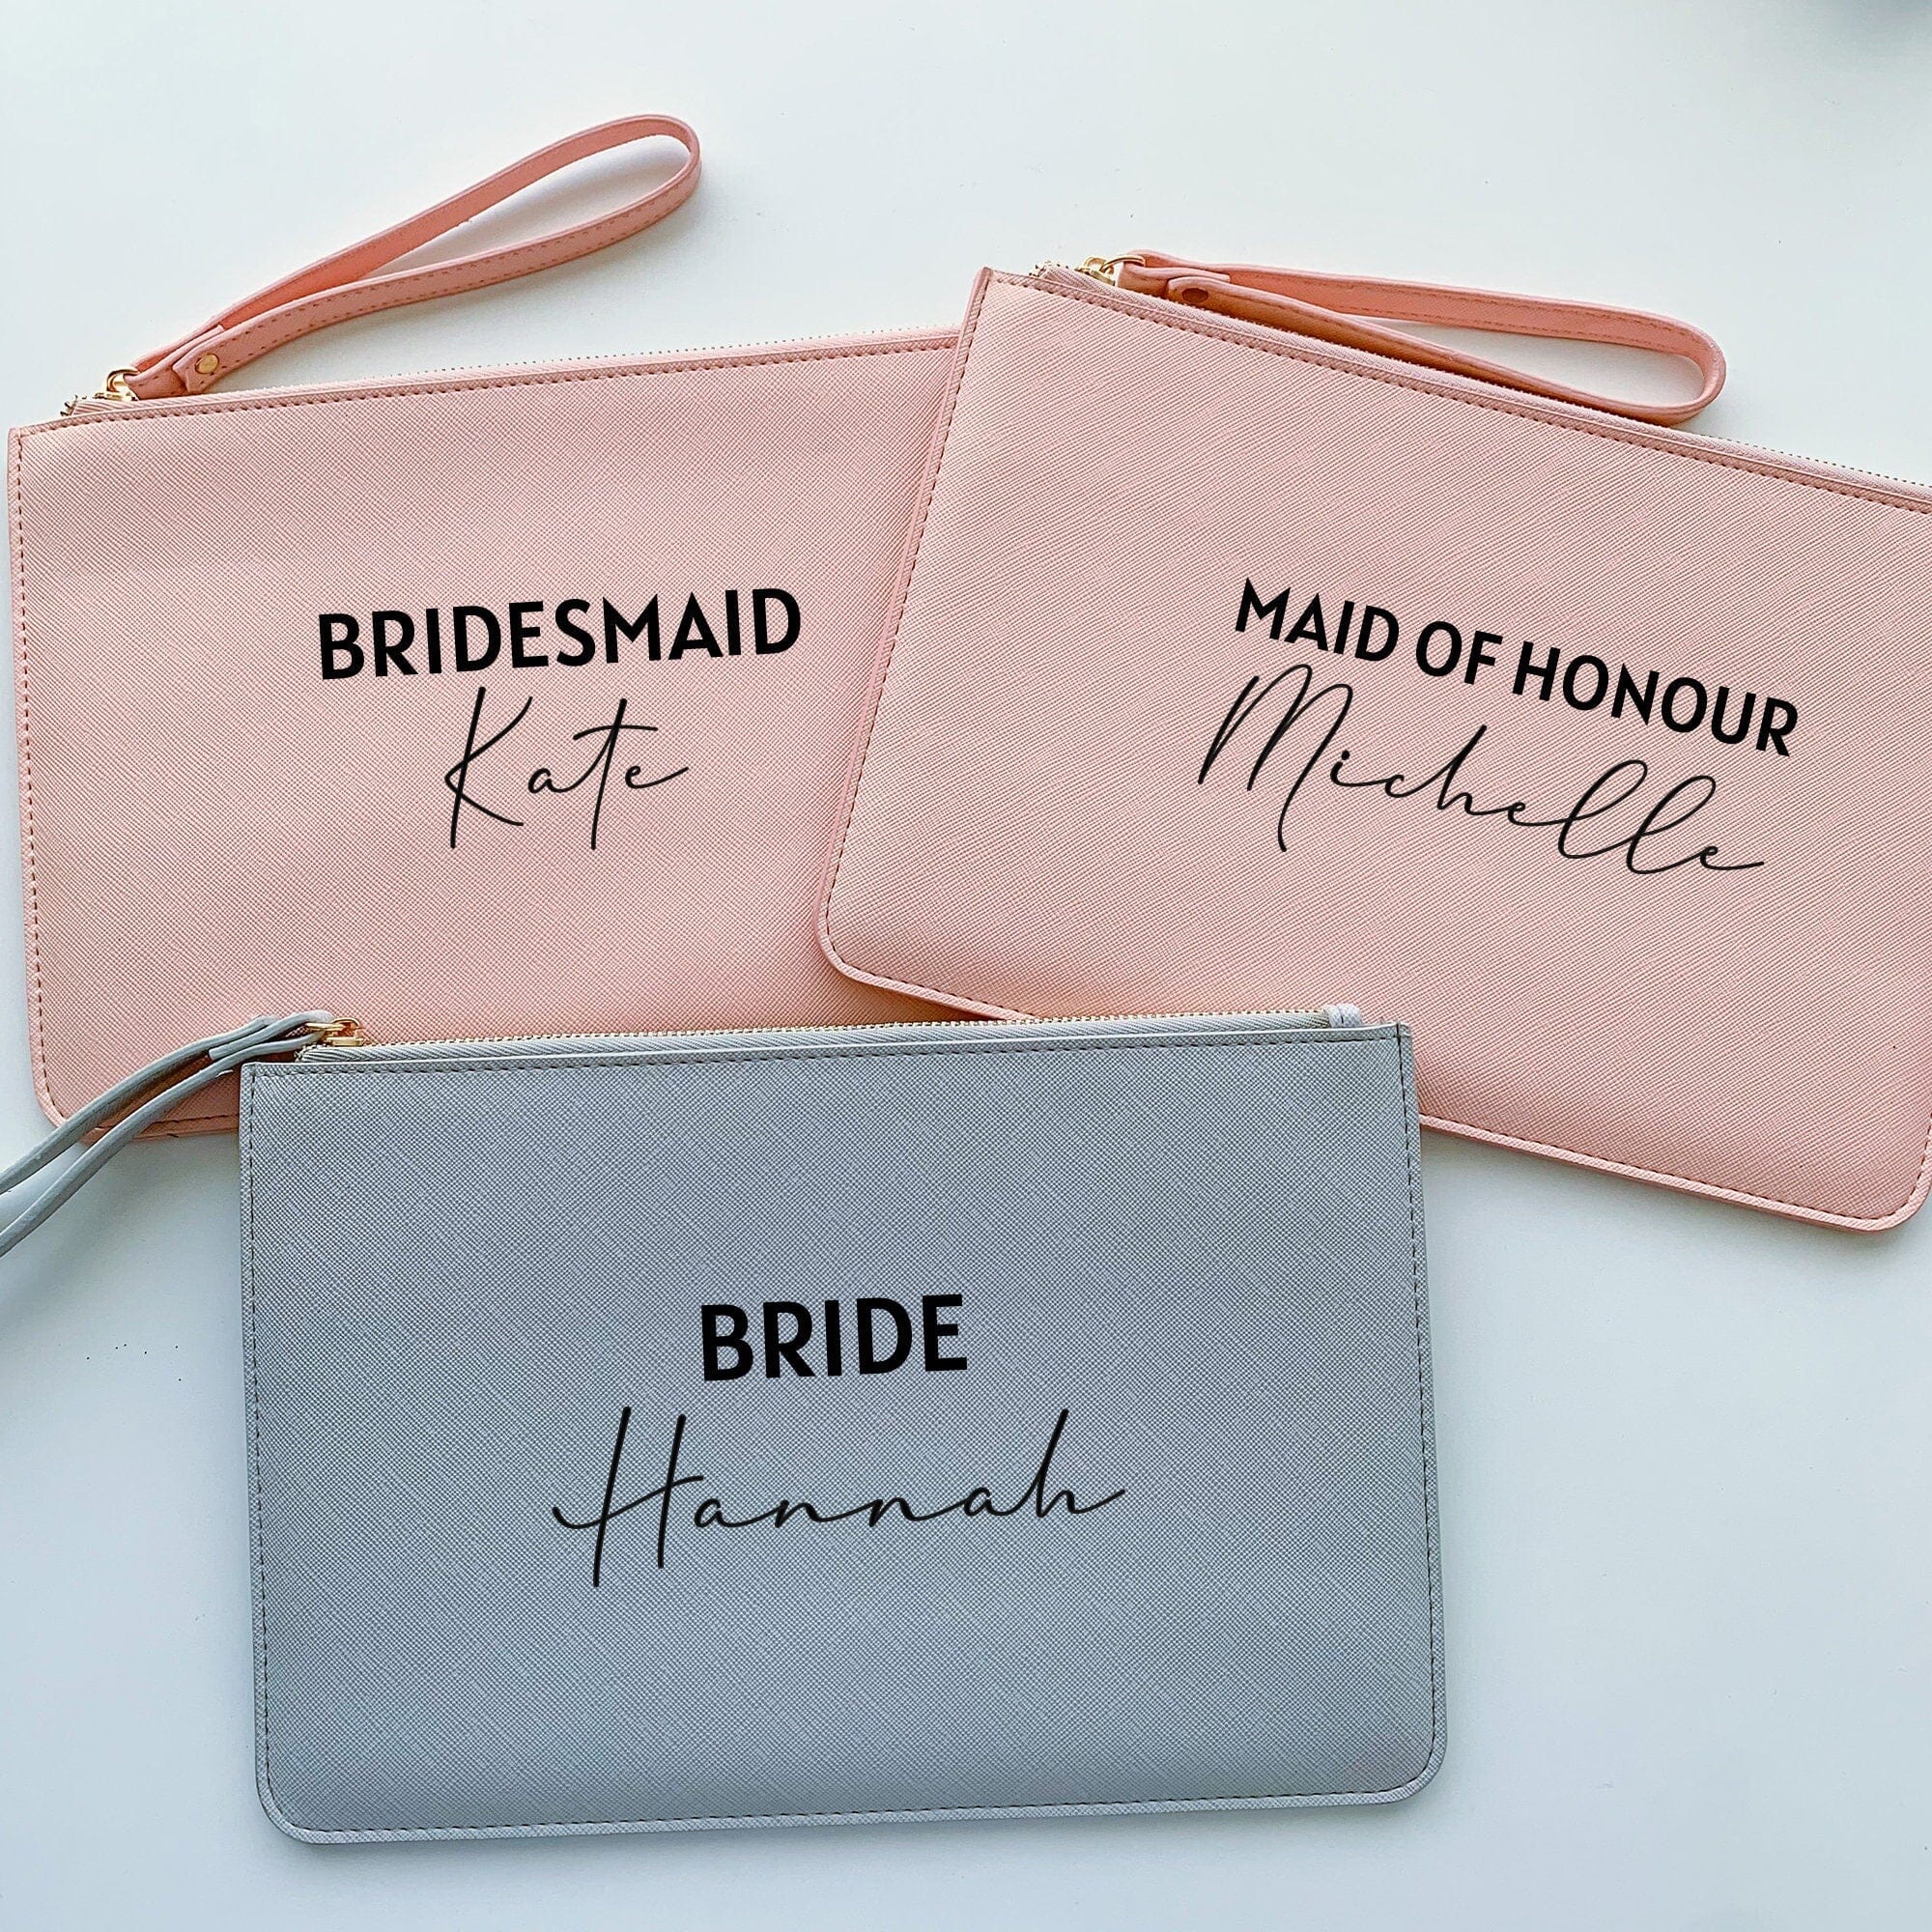 Personalised bride make up bag and bridesmaid gift with name, Bridesmaid Maid of honour